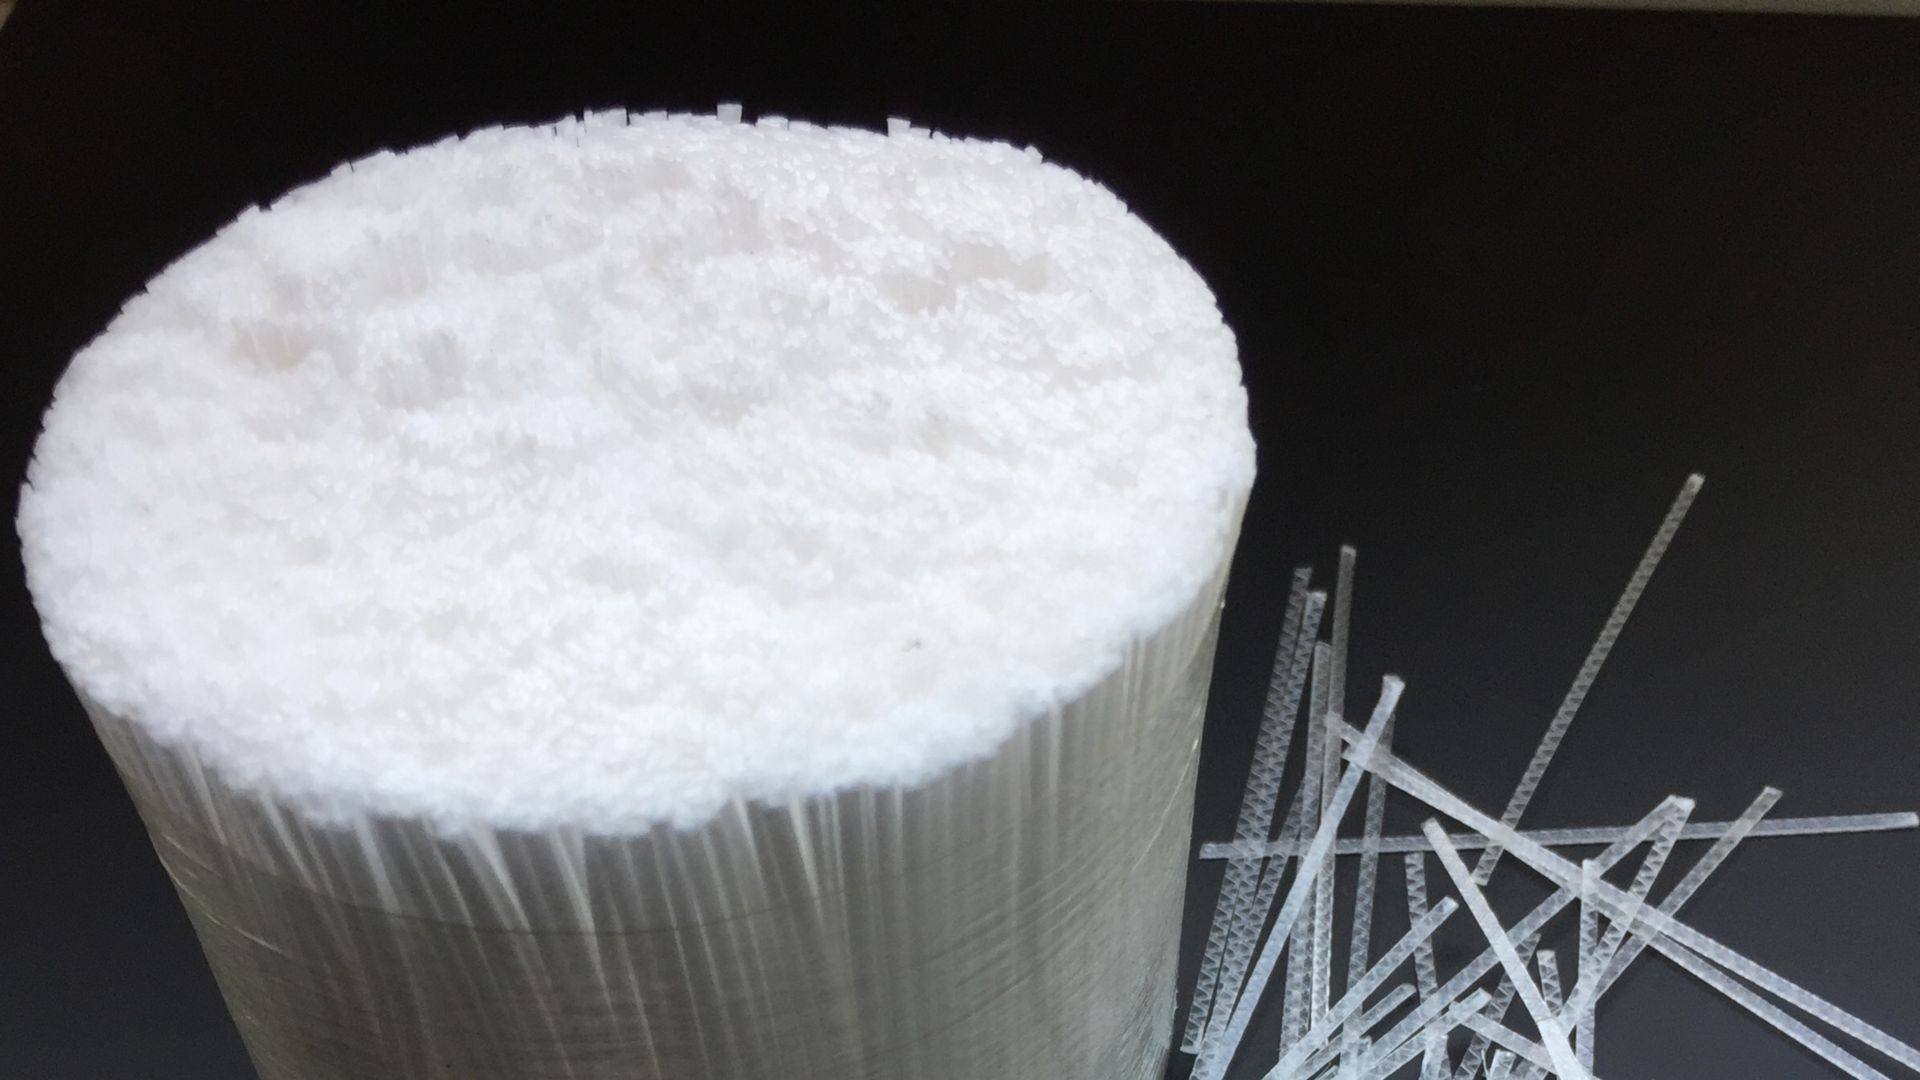 SikaFiber fibers for concrete reinforcement